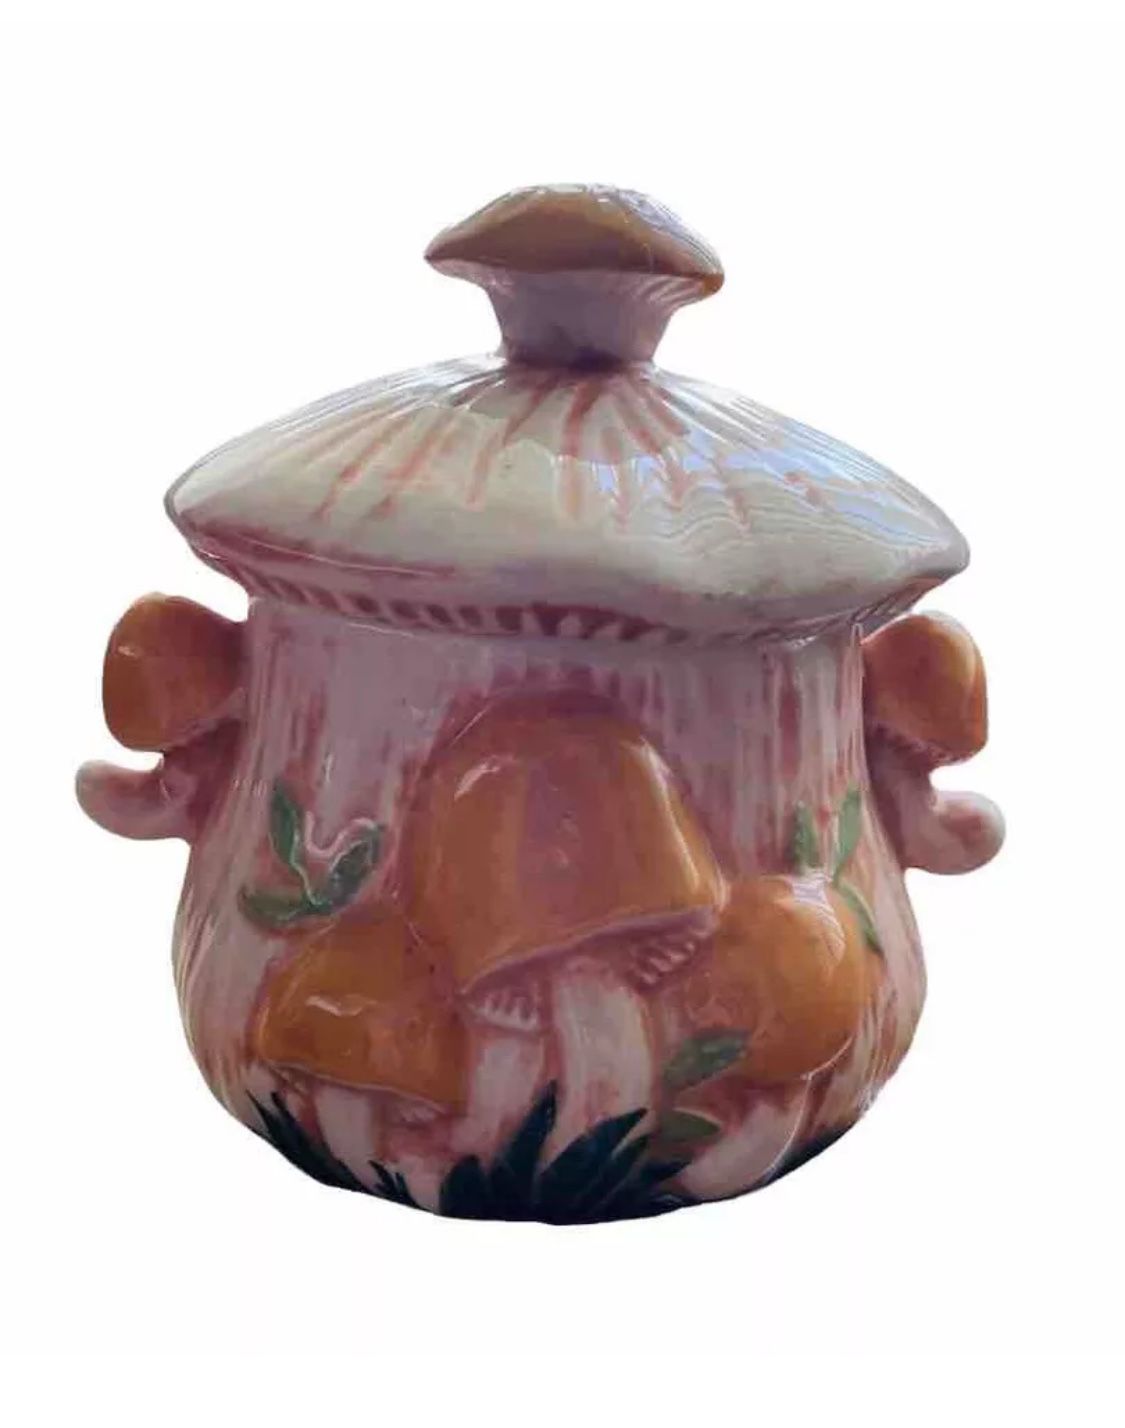 Vintage Arnel's Mushroom Ceramic Sugar Set Multicolor Home Kitchen Decor